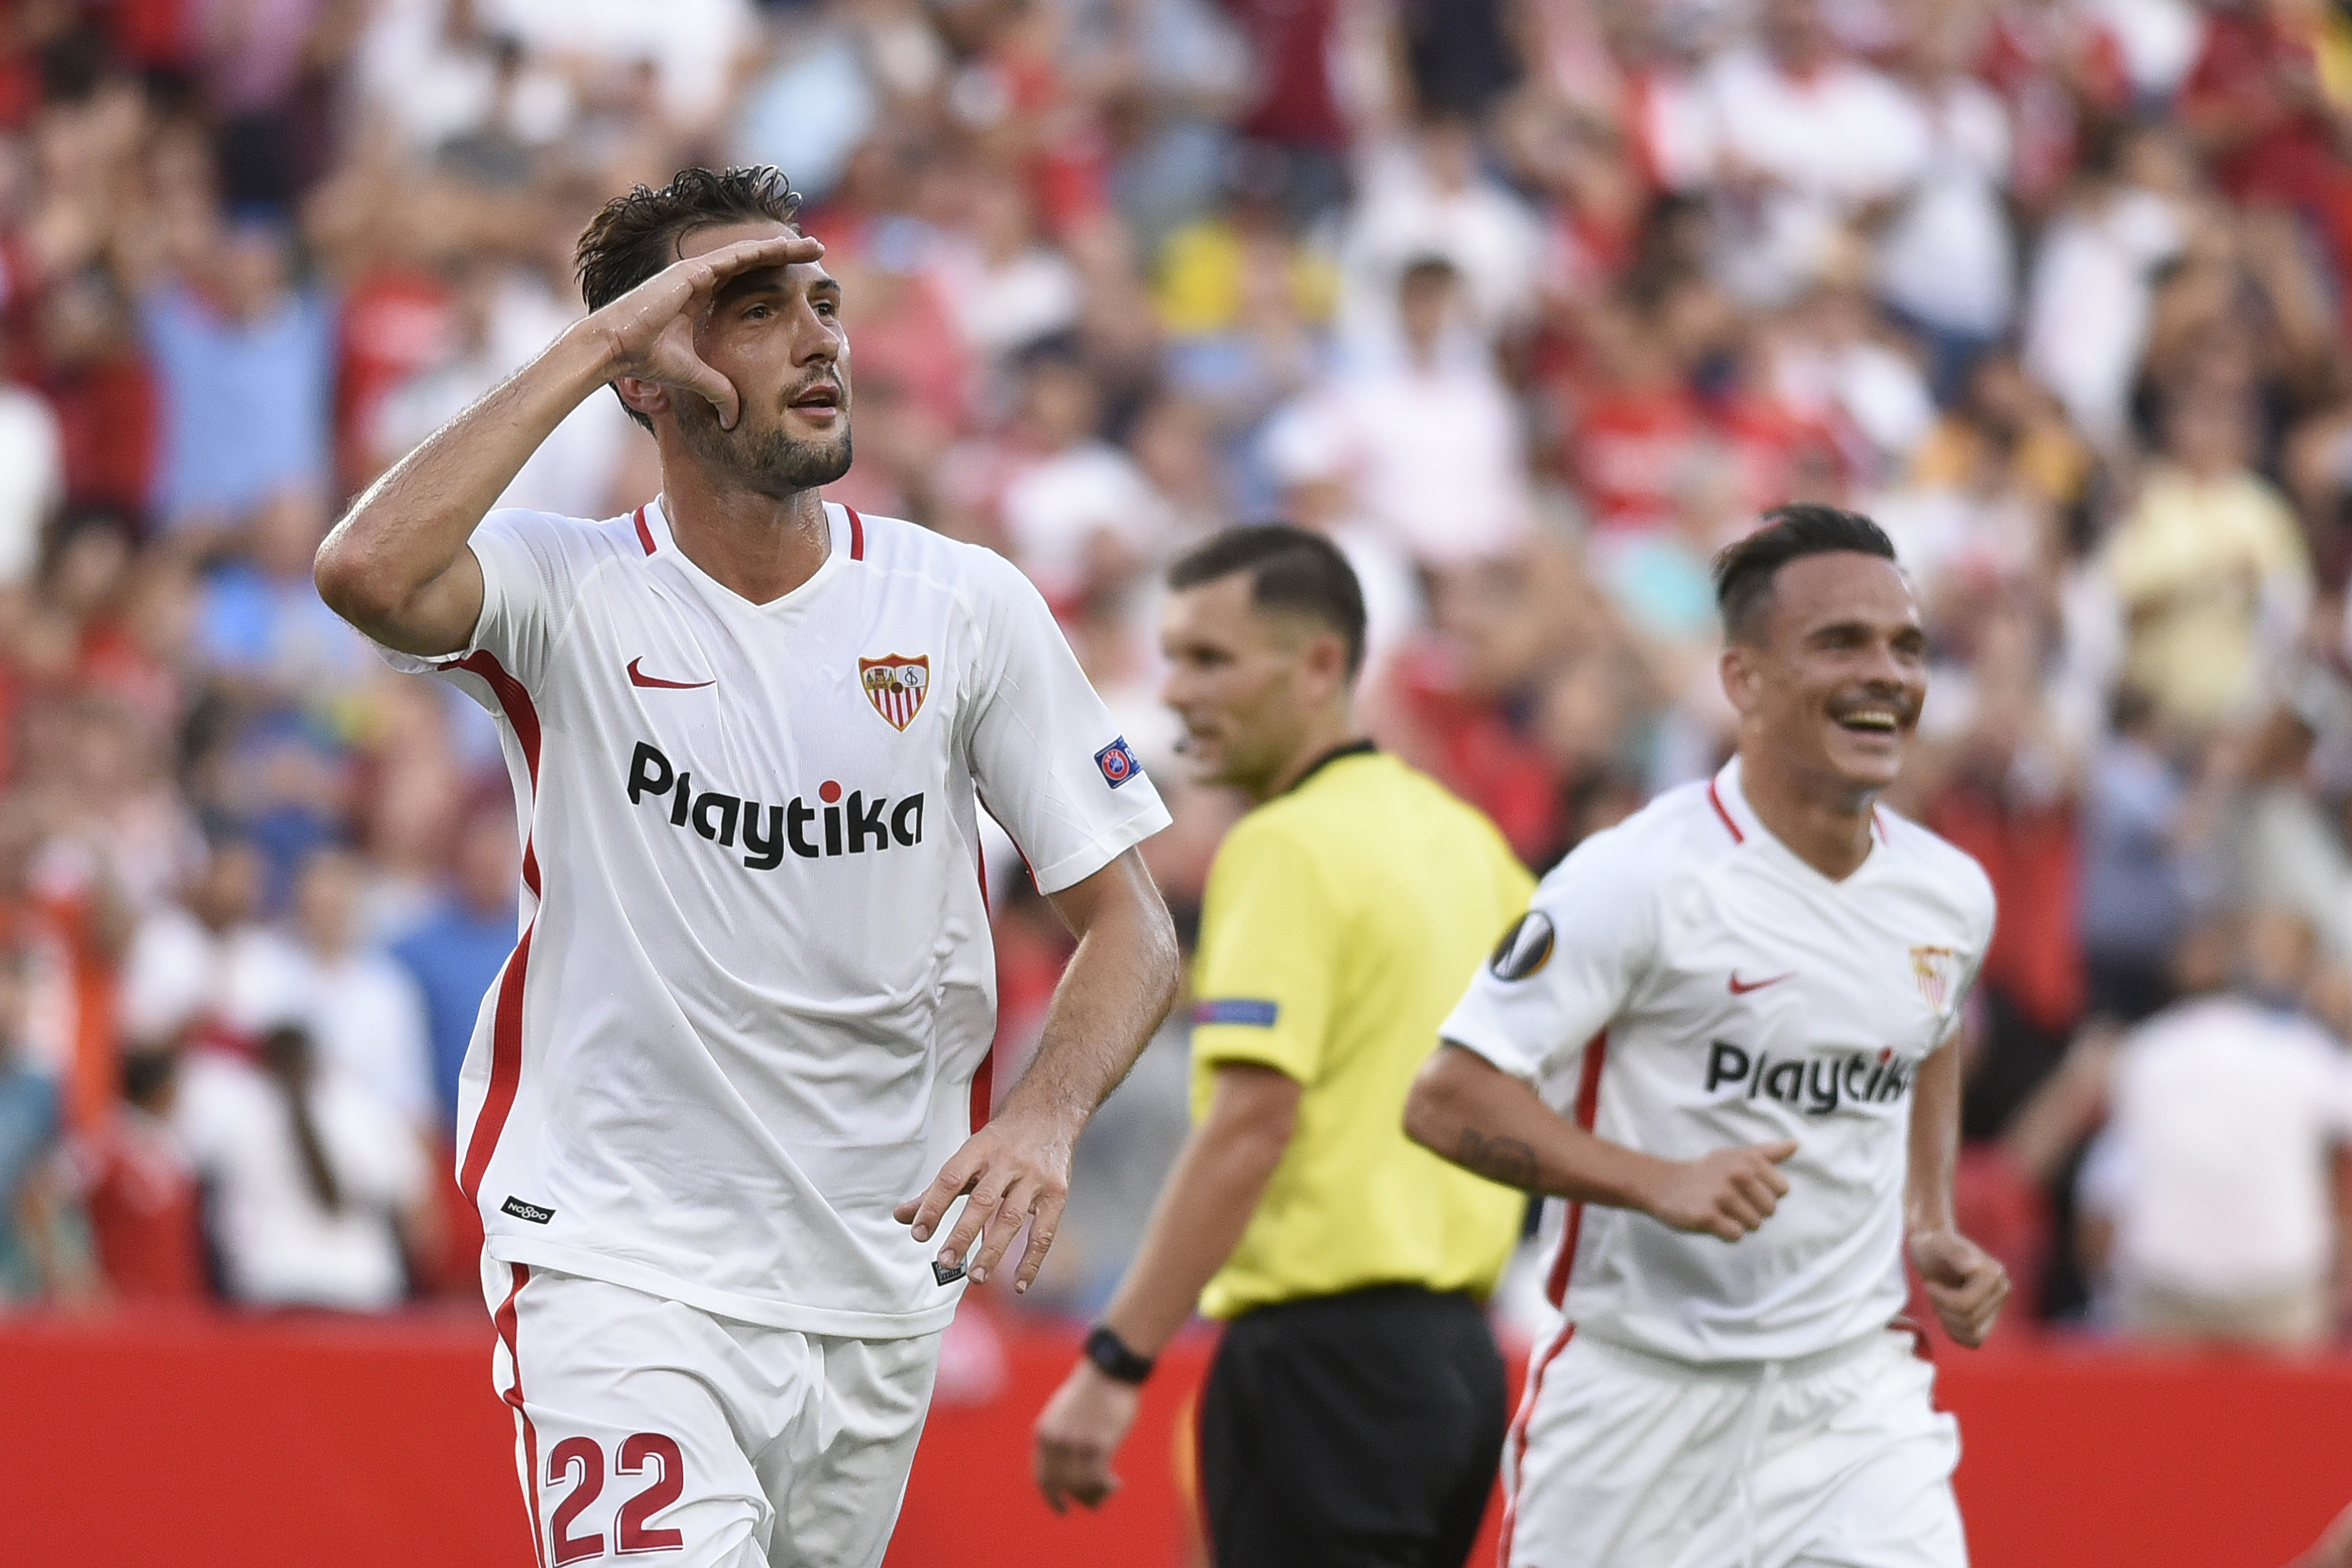 Franco Vázquez celebrates scoring a goal for Sevilla FC